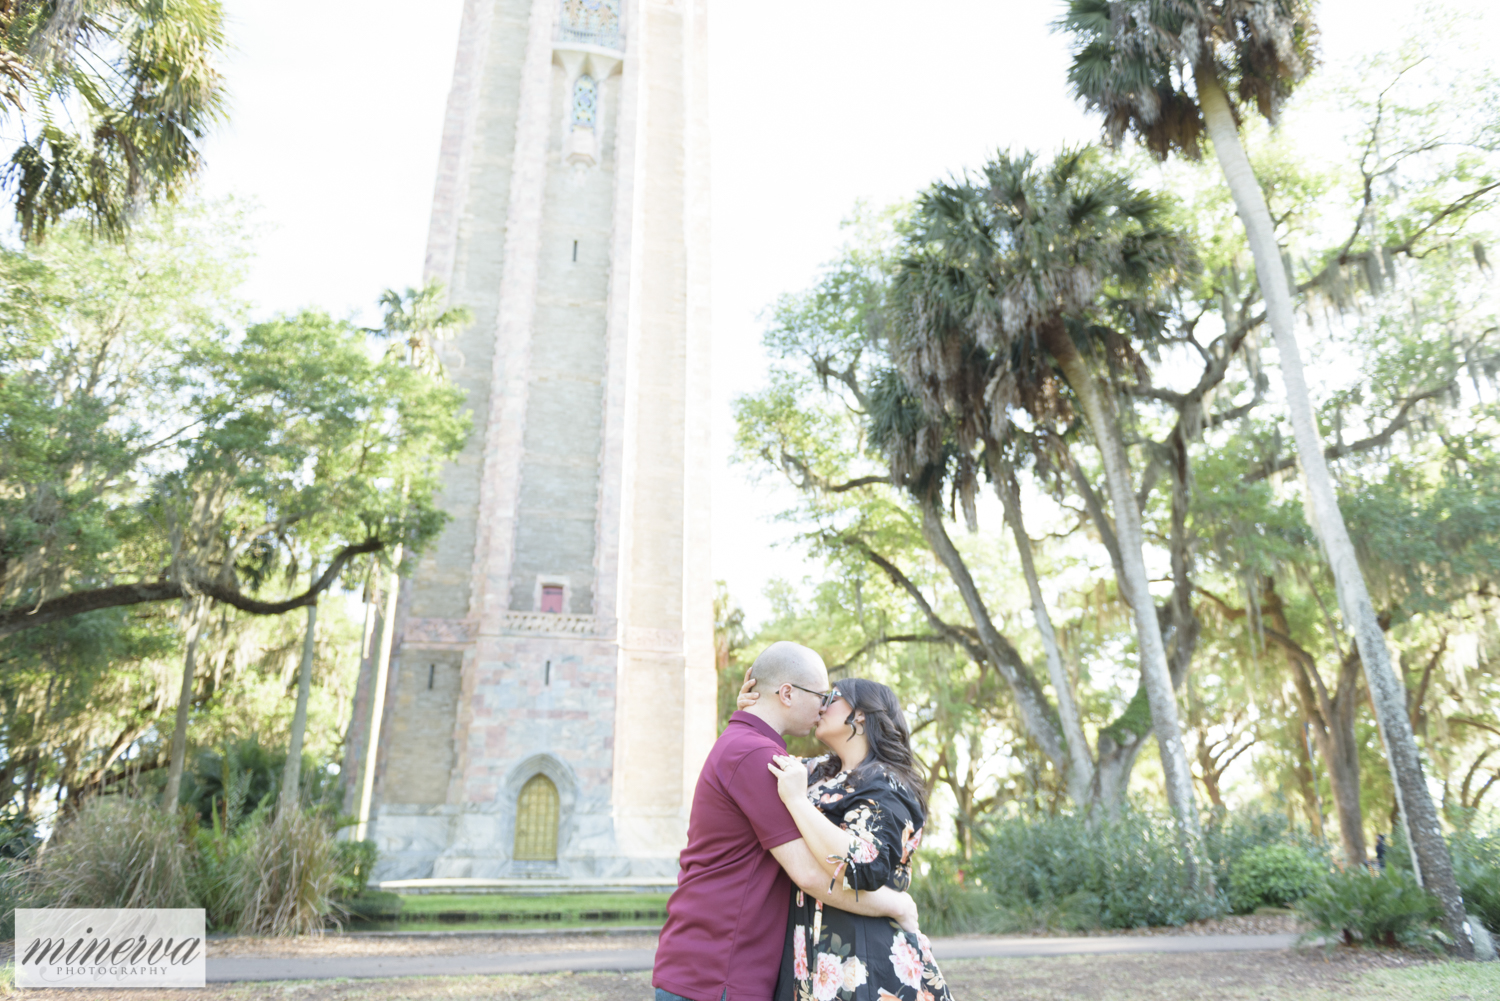 009_bok-tower-gardens_wedding-engagement-portrait-orlando-photography_central-florida-photographer